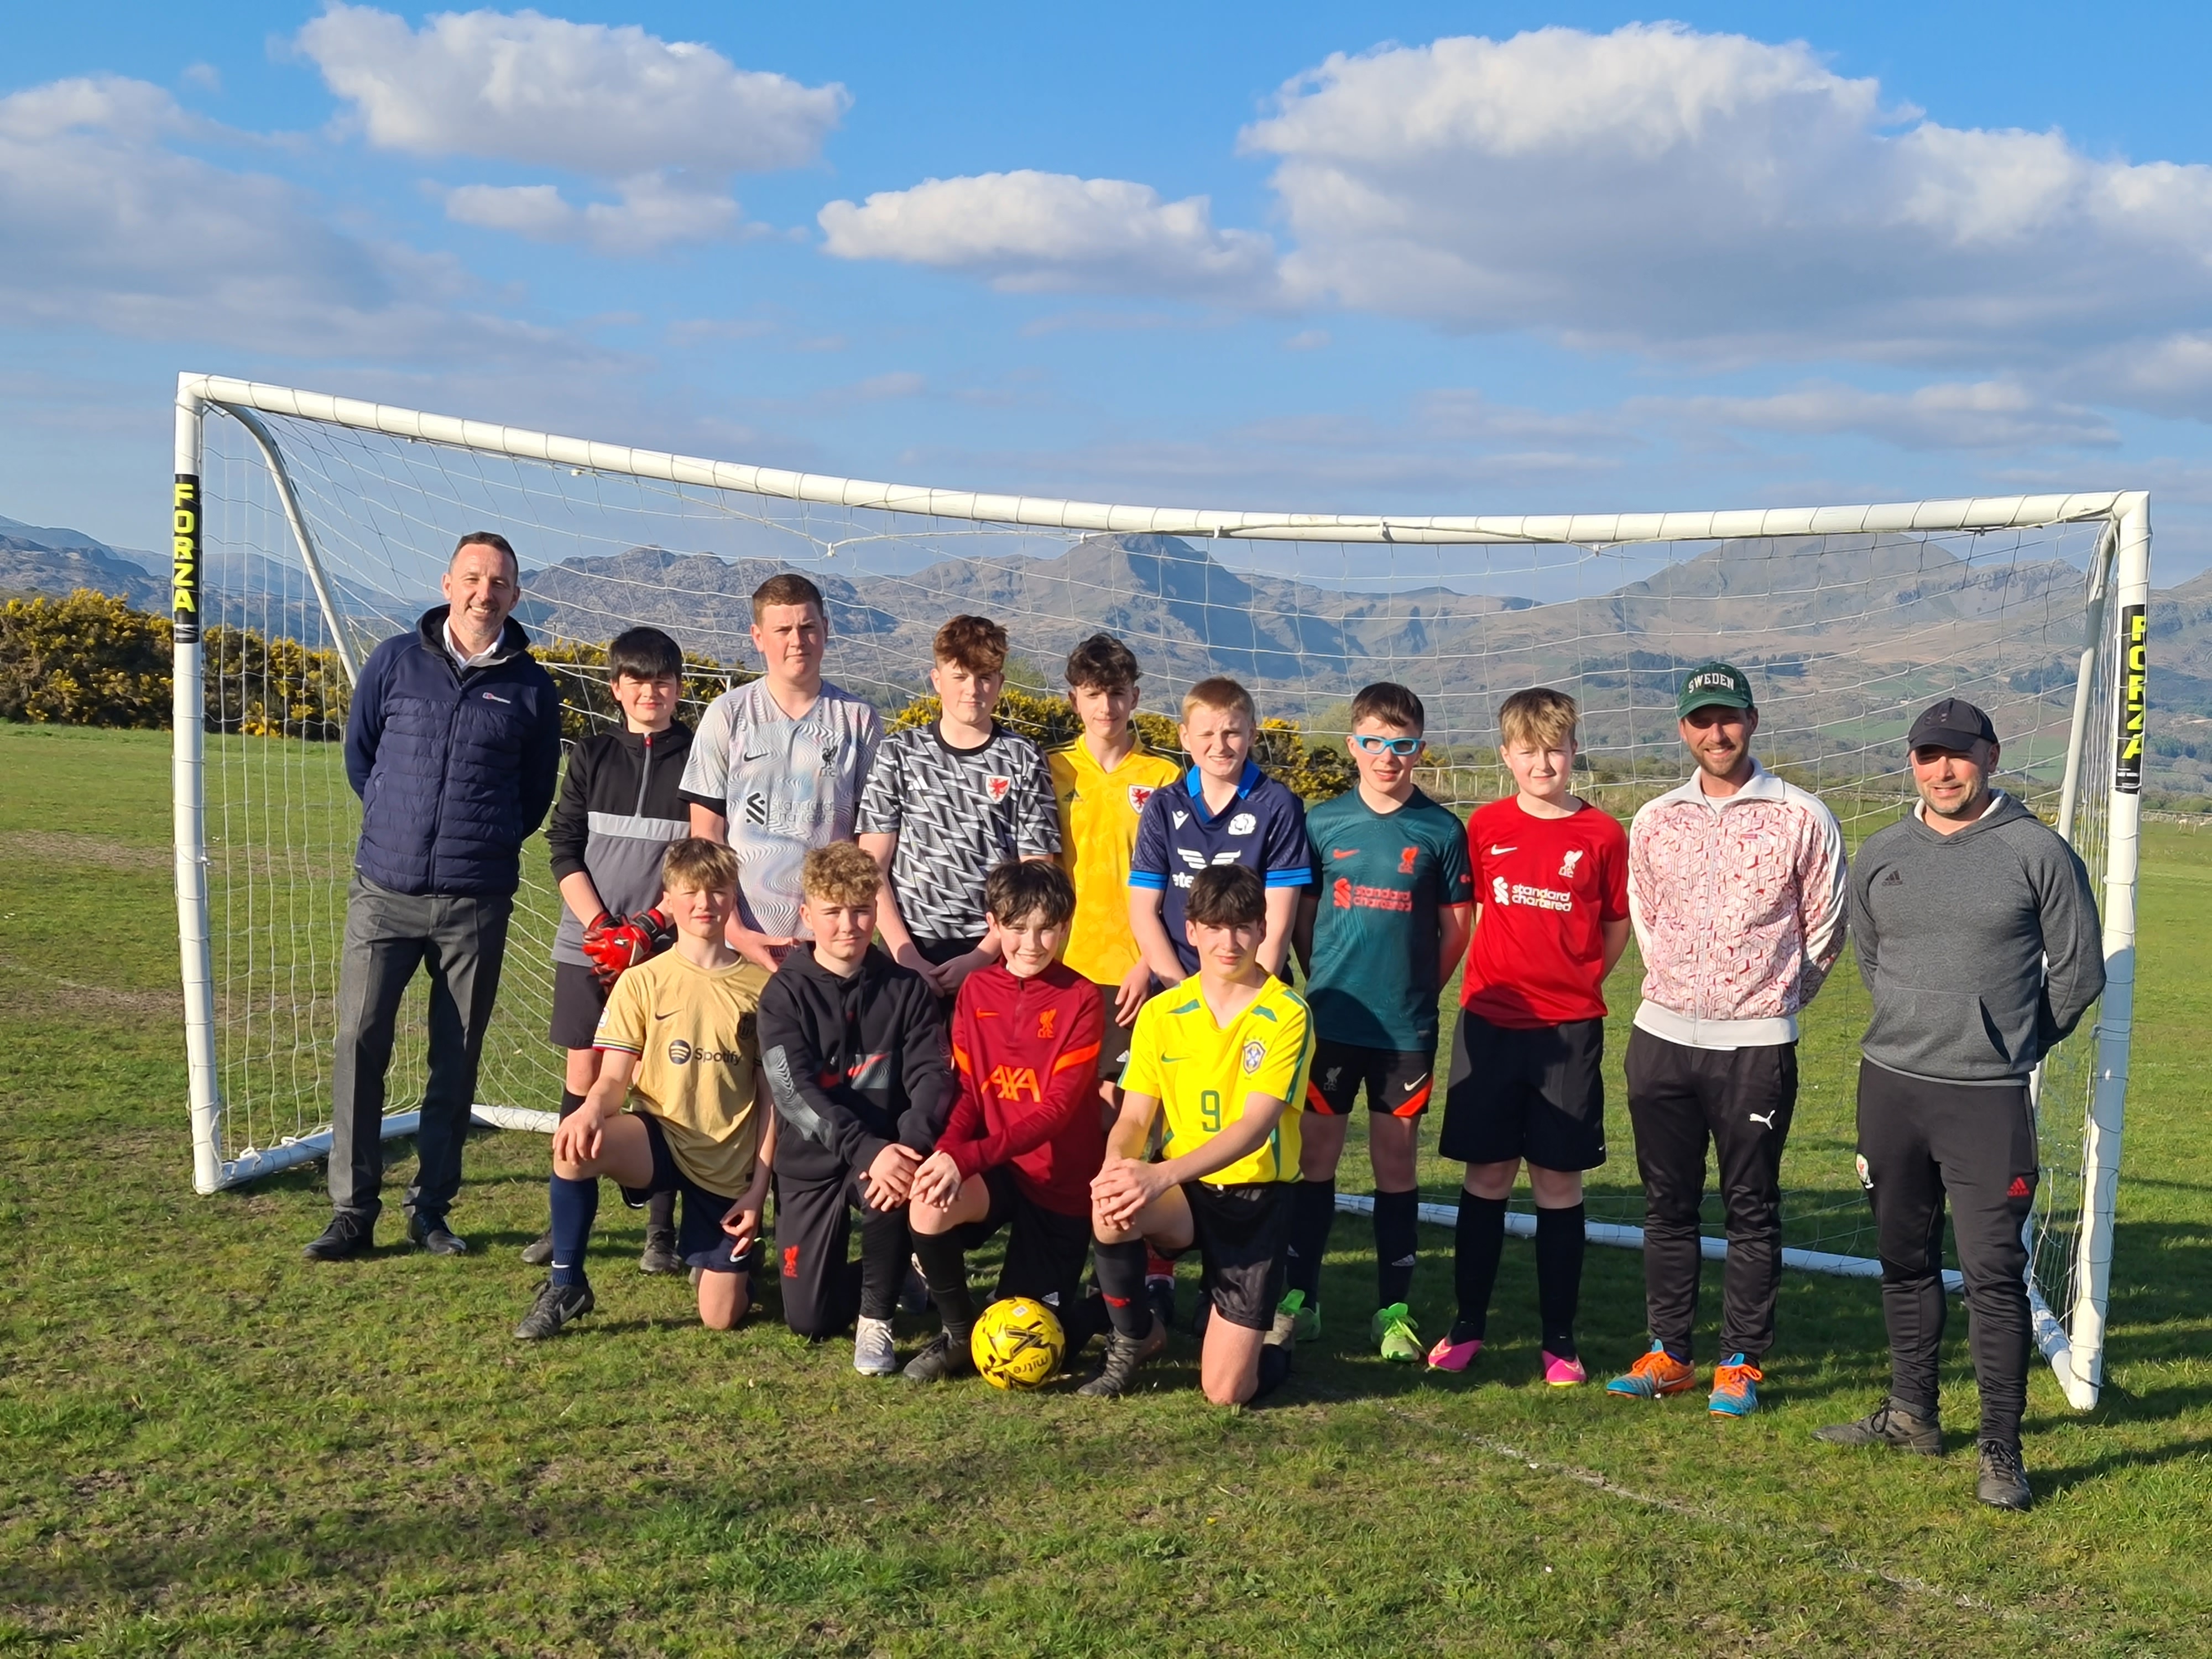 Community Grant Fund recipients from Porthmadog Junior Football Club